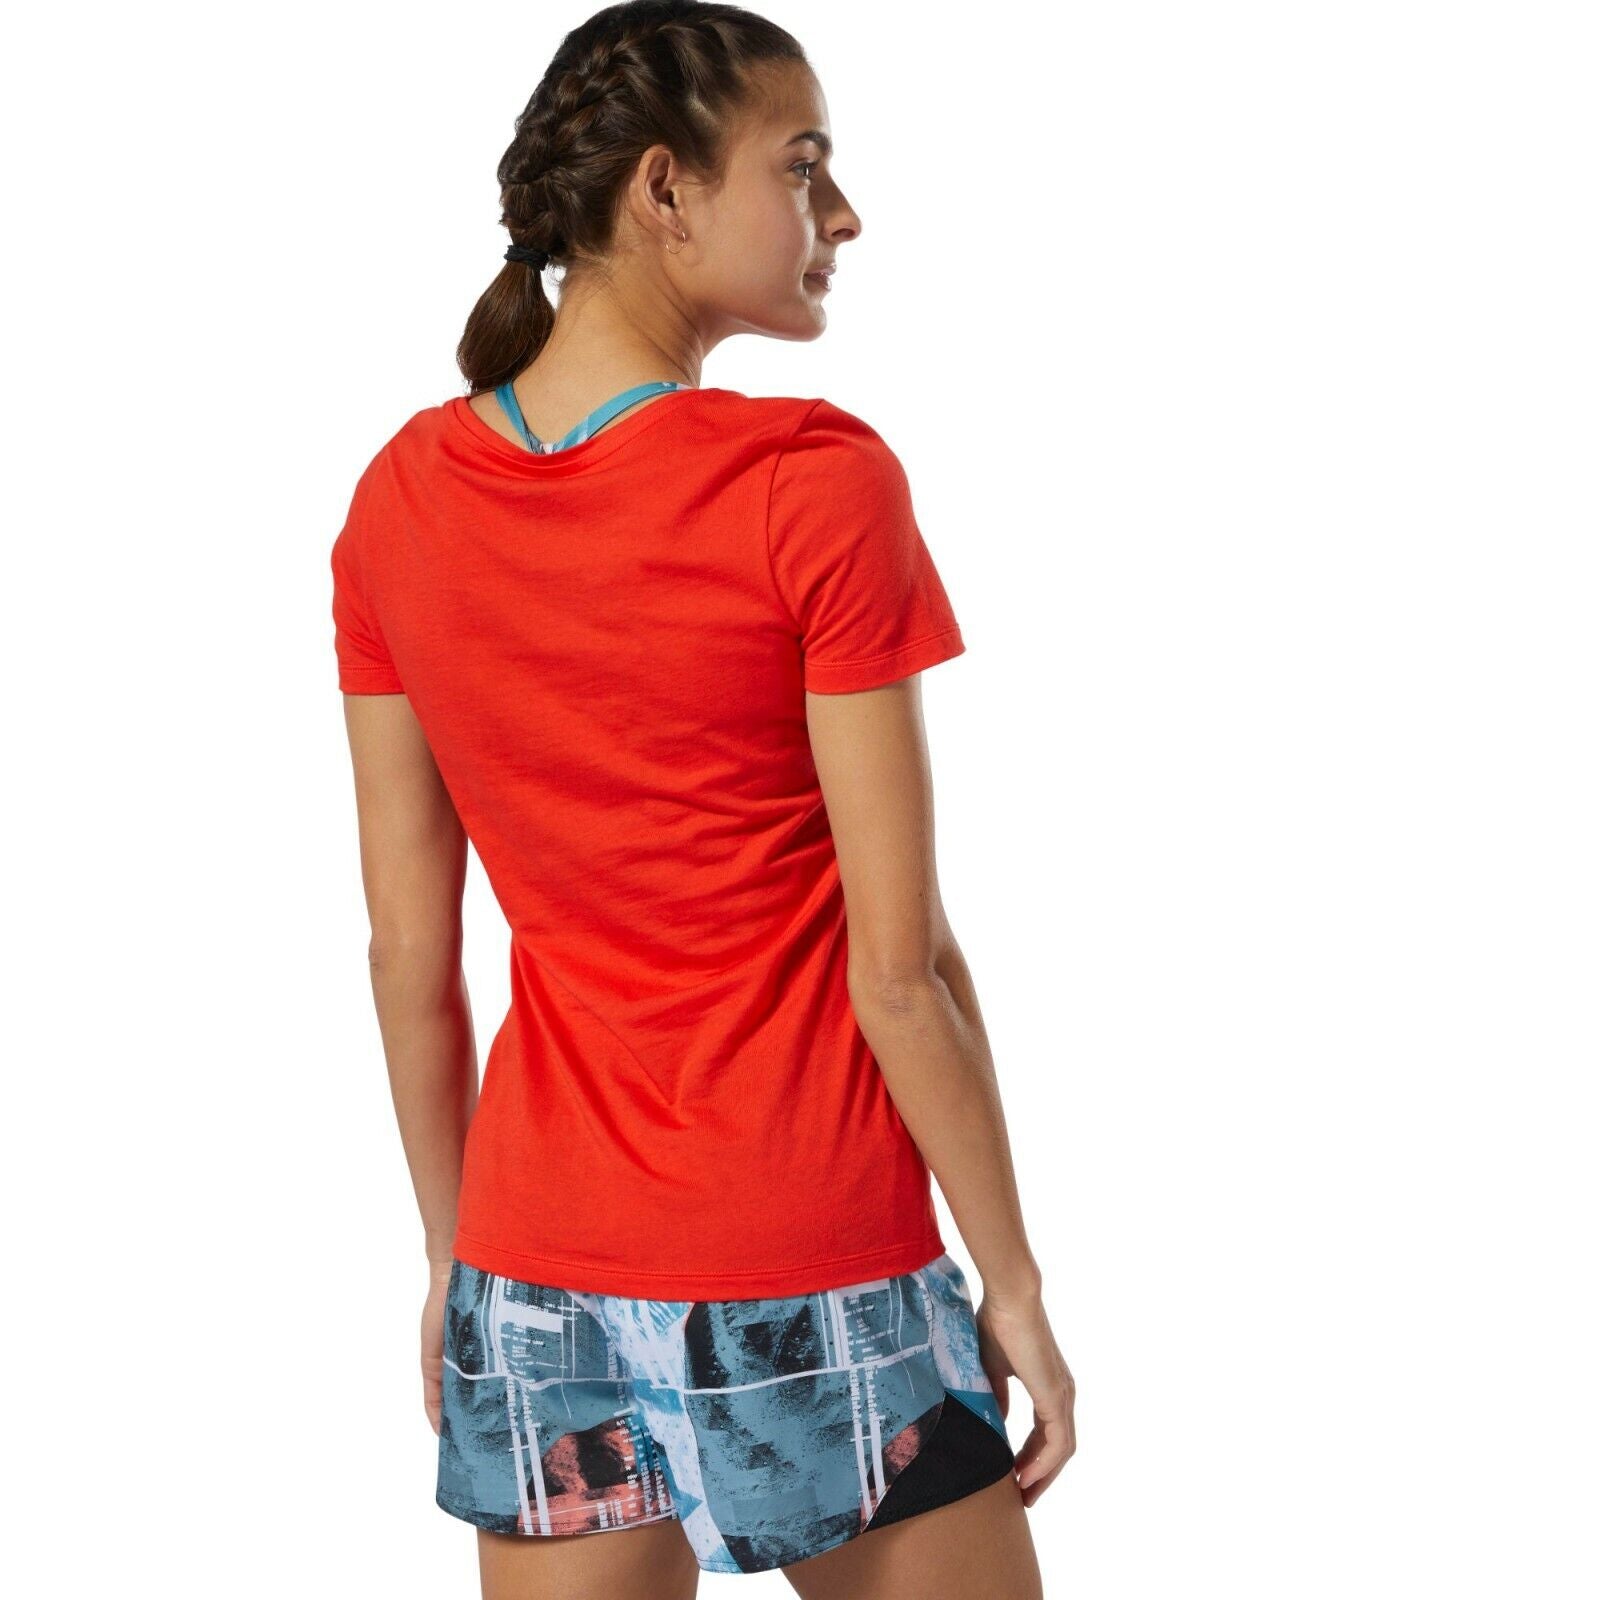 Reebok Women's Linear T-shirt Red